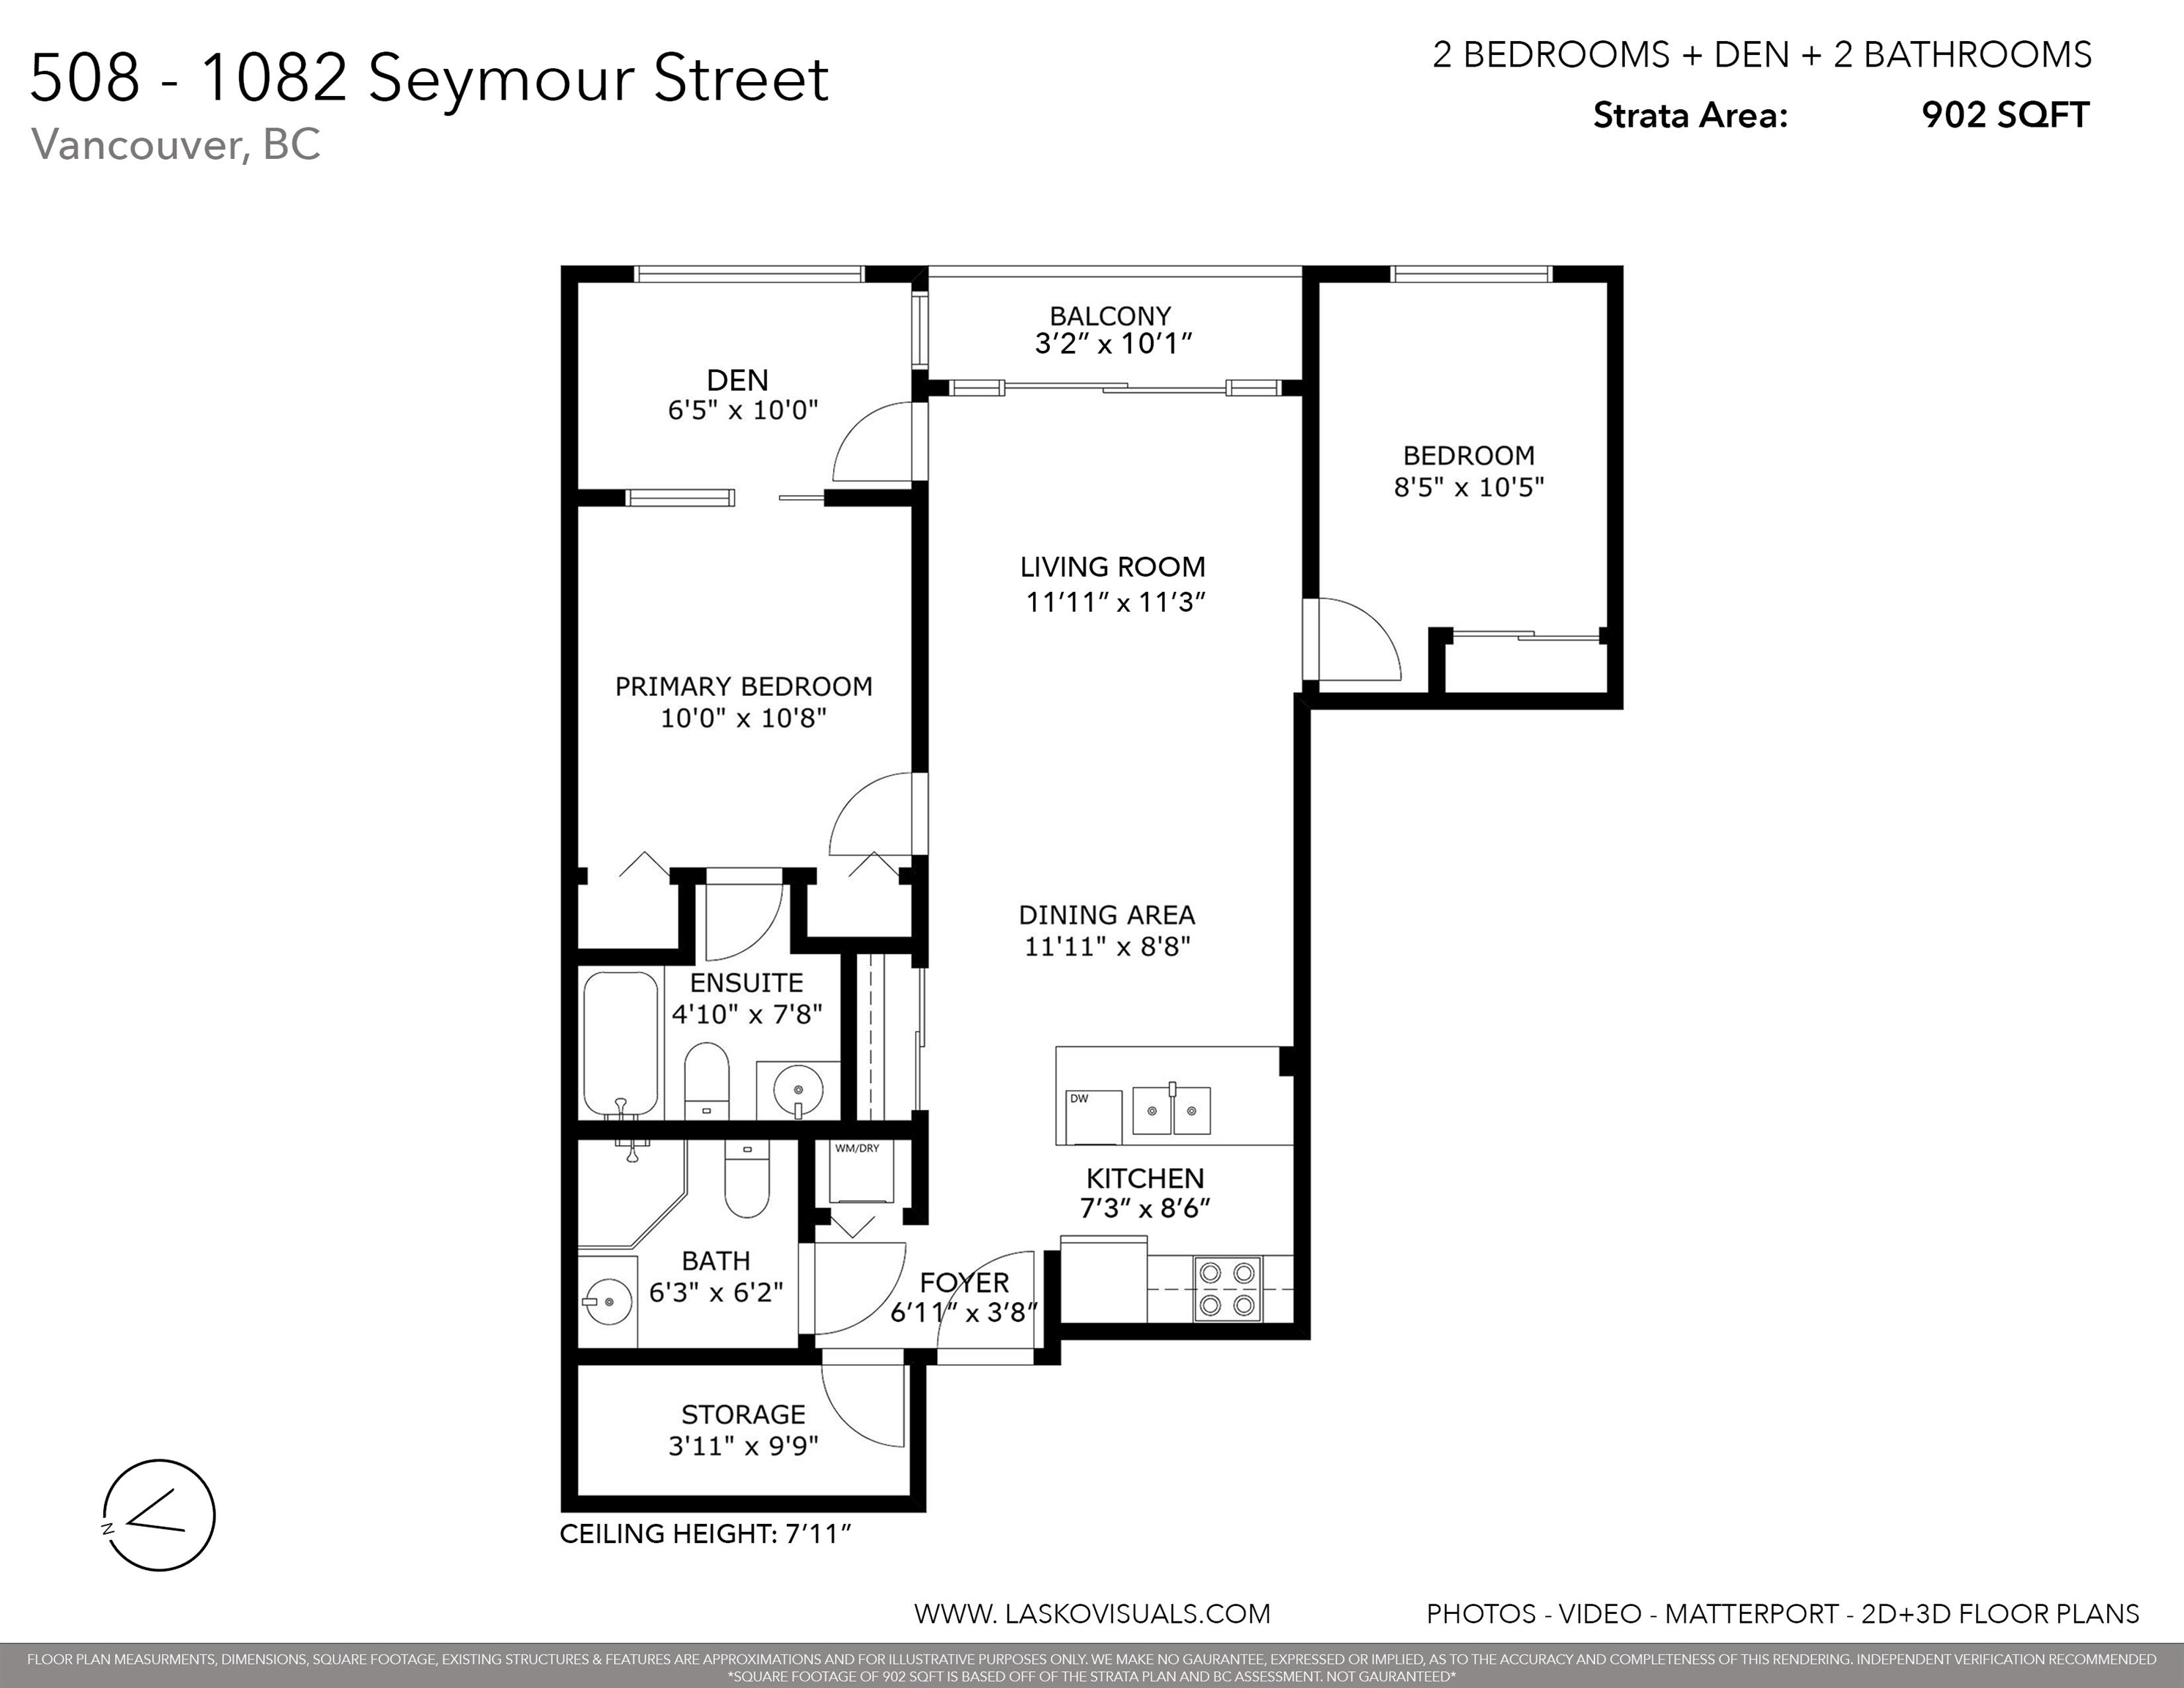 508-1082 Seymour Street, Vancouver, BC, Apt/Condo For Sale - REW